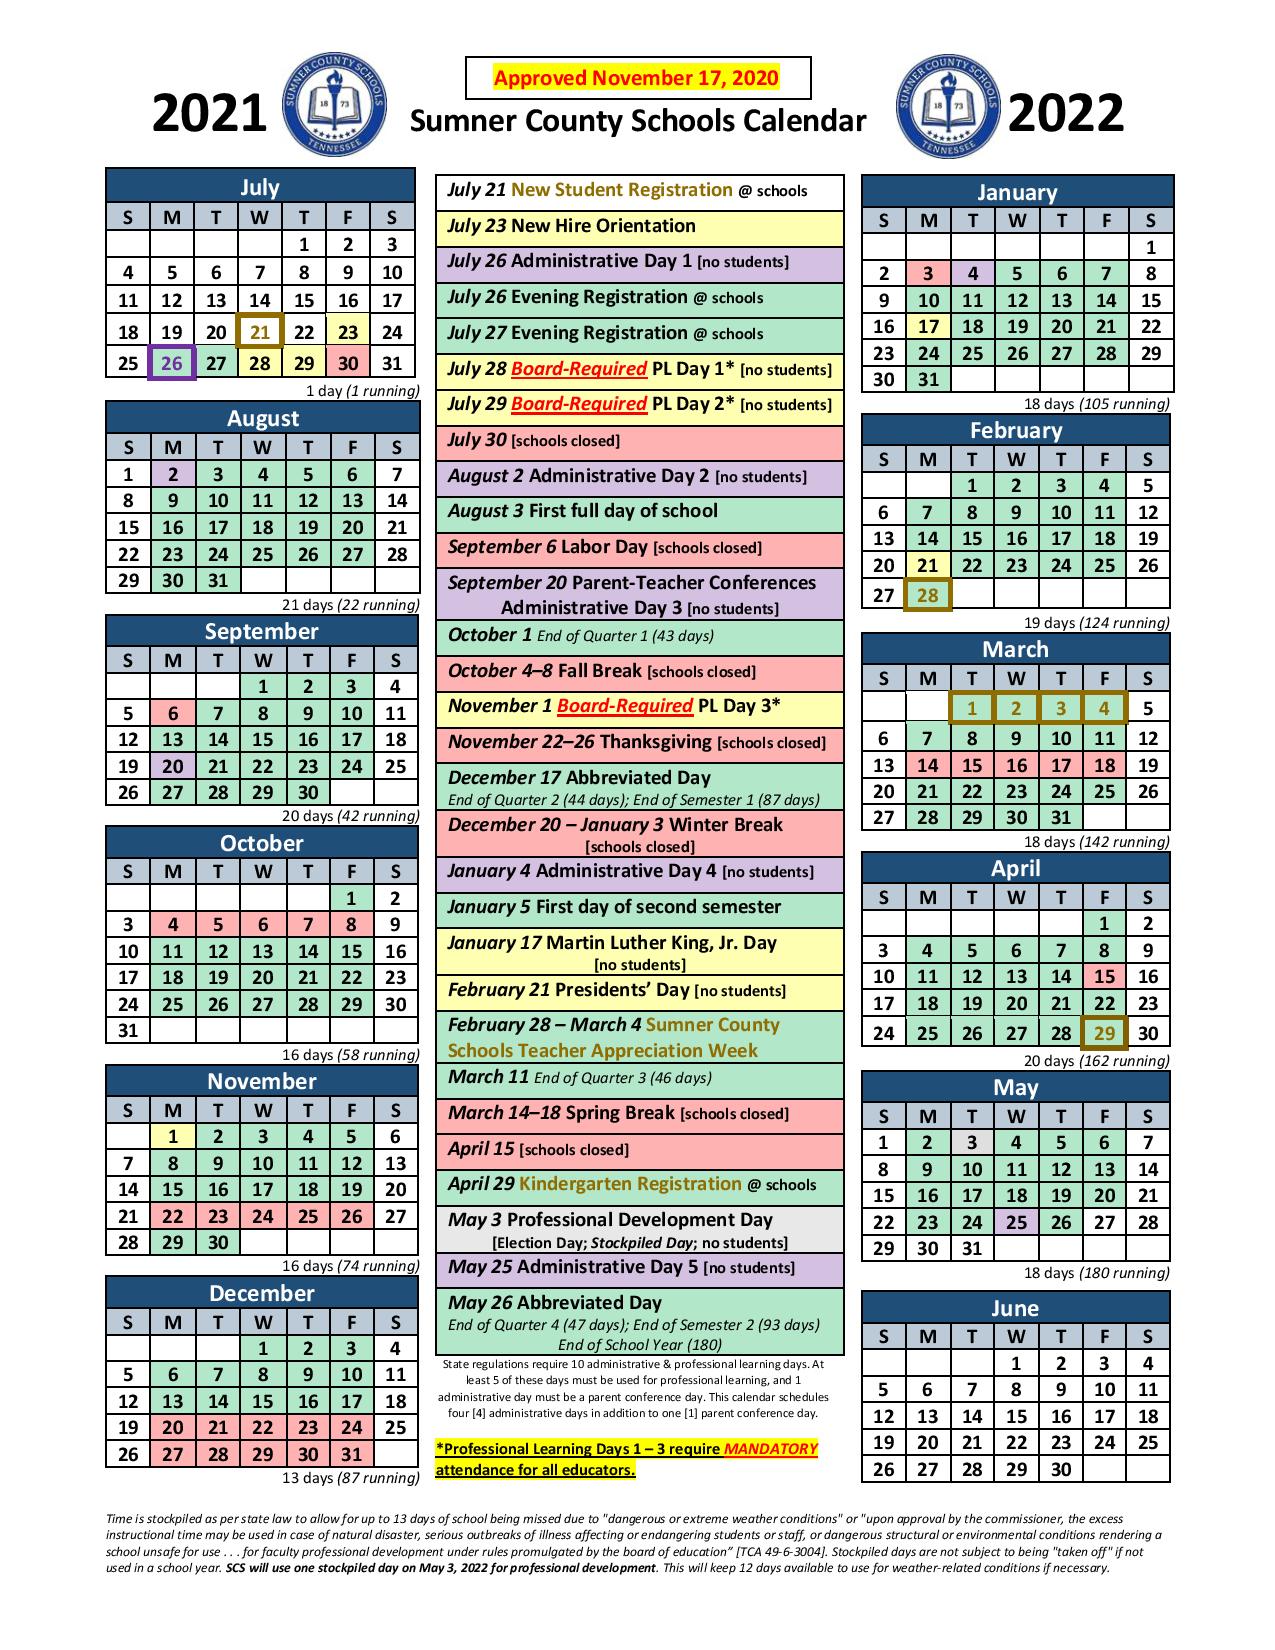 Wsfcs 2022 Student Calendar academic calendar 2022